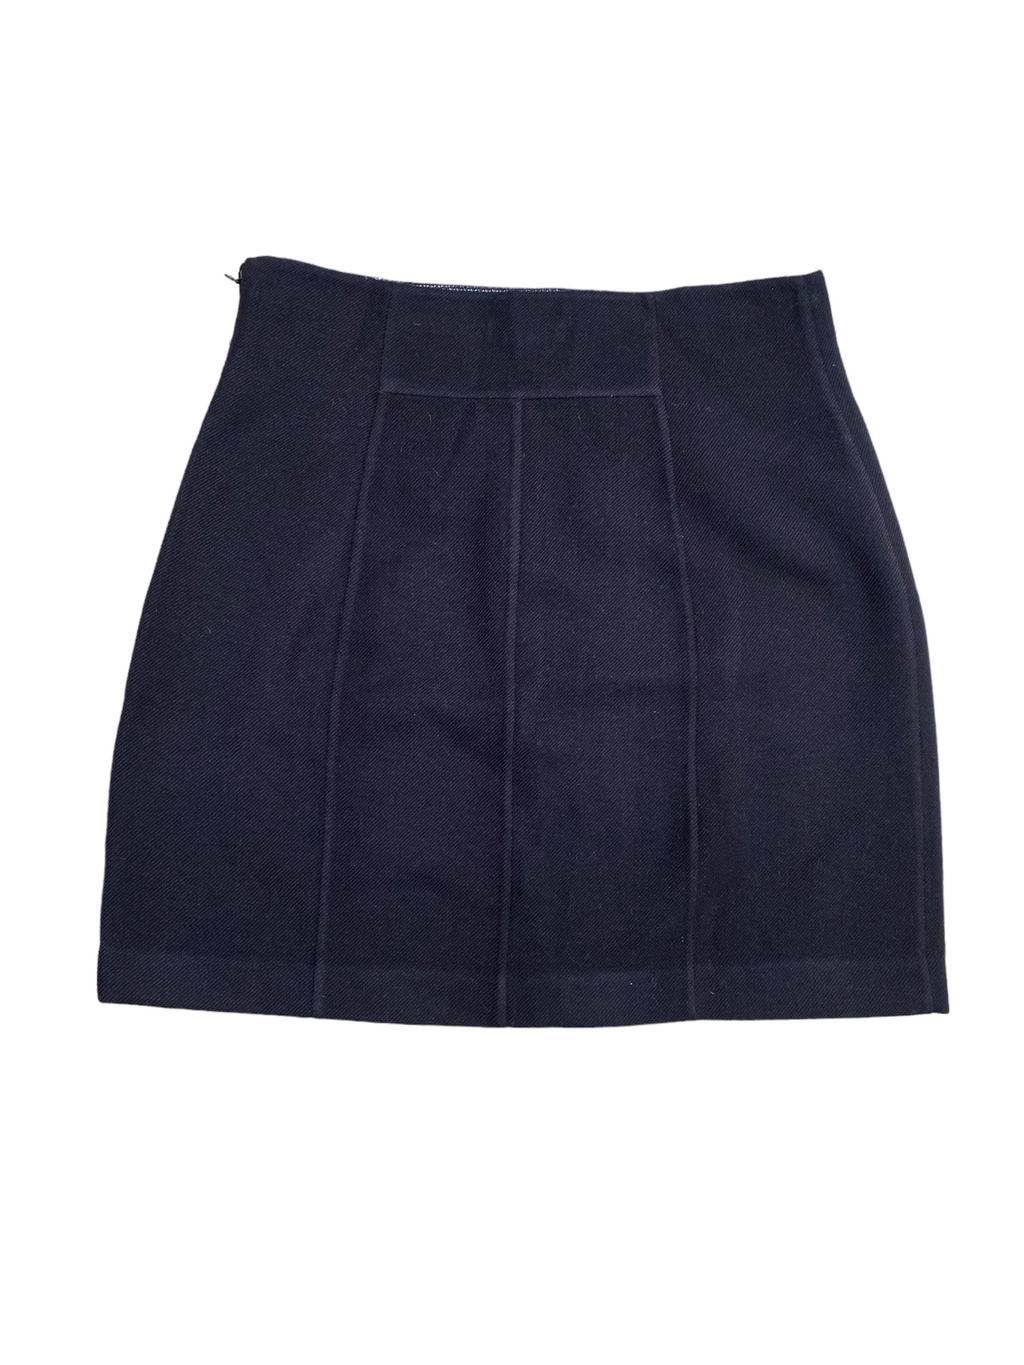 Wool black skirt